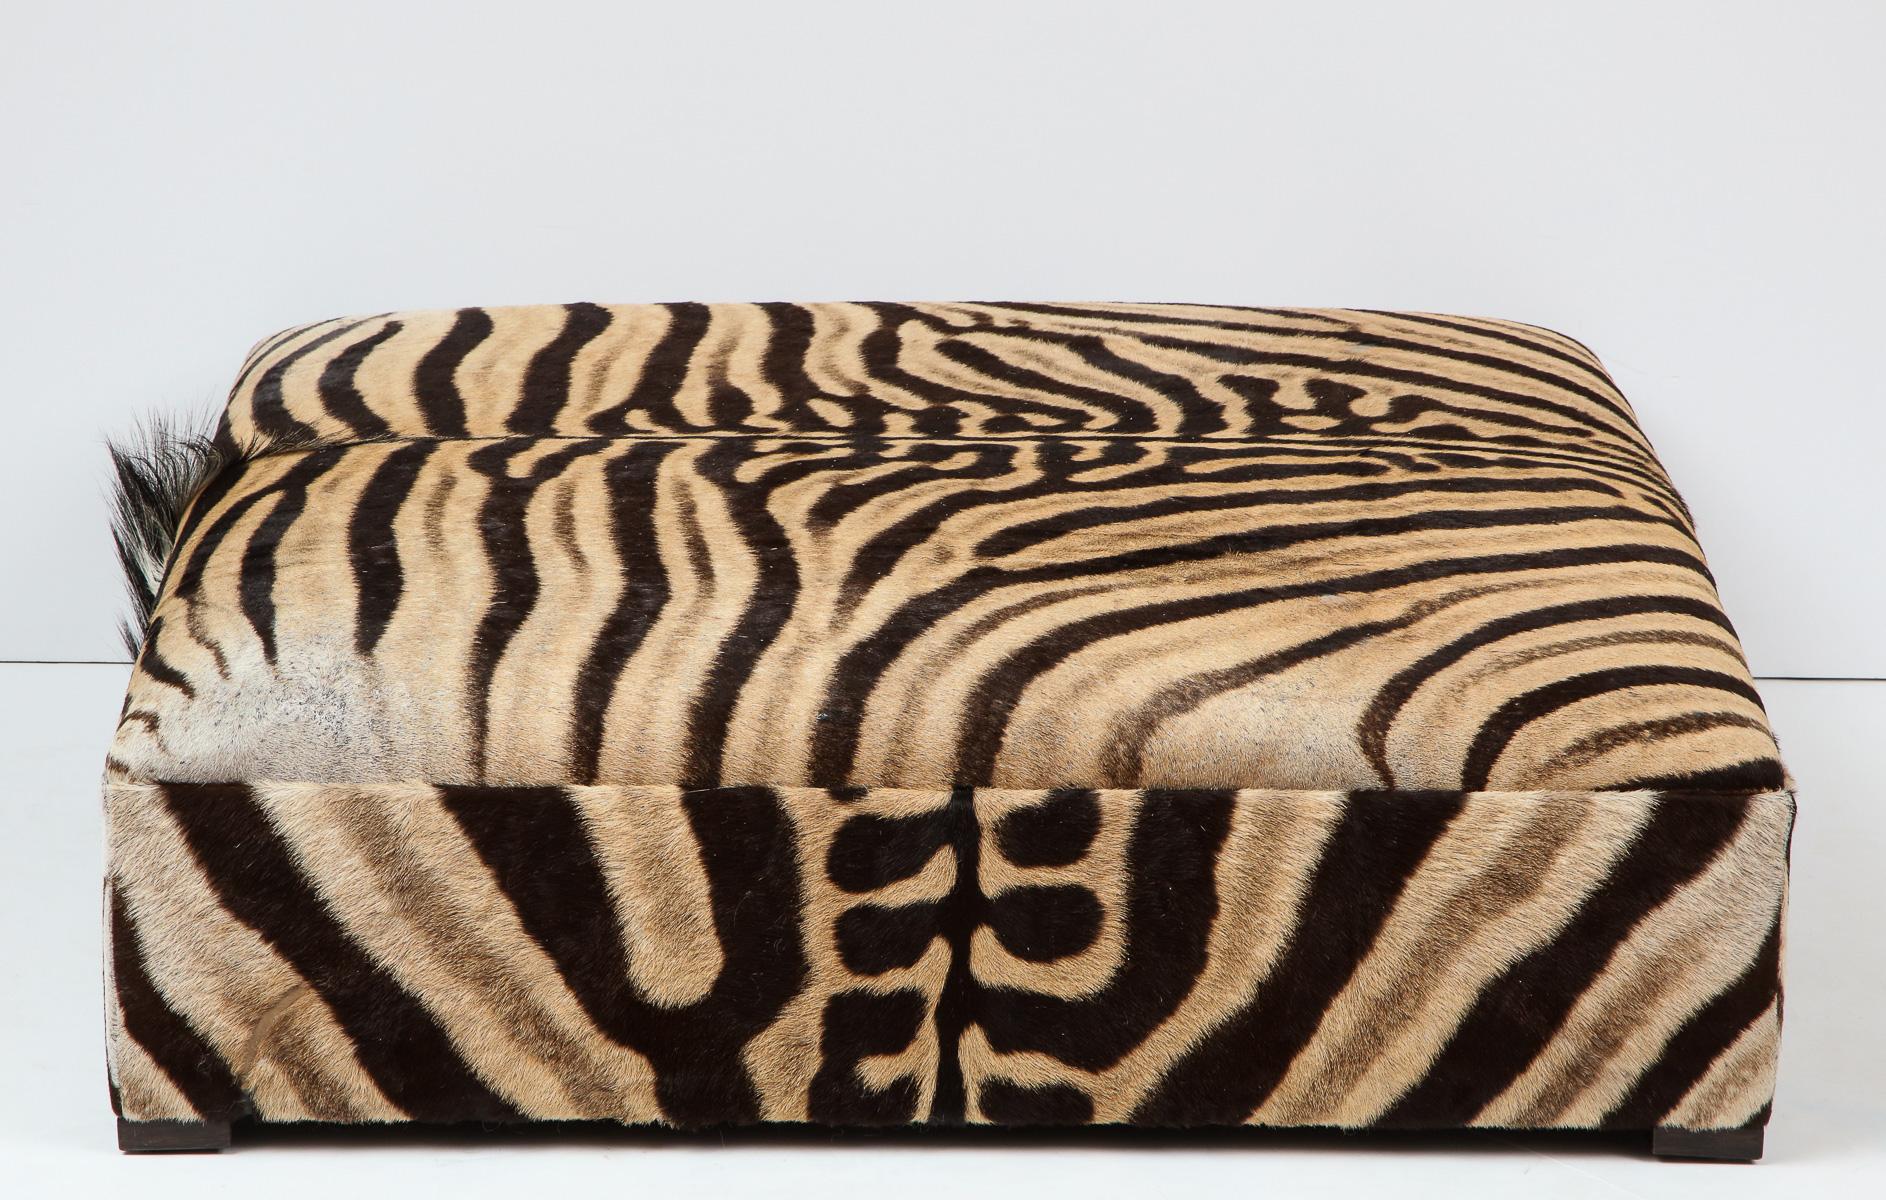 Zebra Hide Zebra Ottoman / Coffee Table, Large Square, Two Zebra hides, Custom Made In USA For Sale